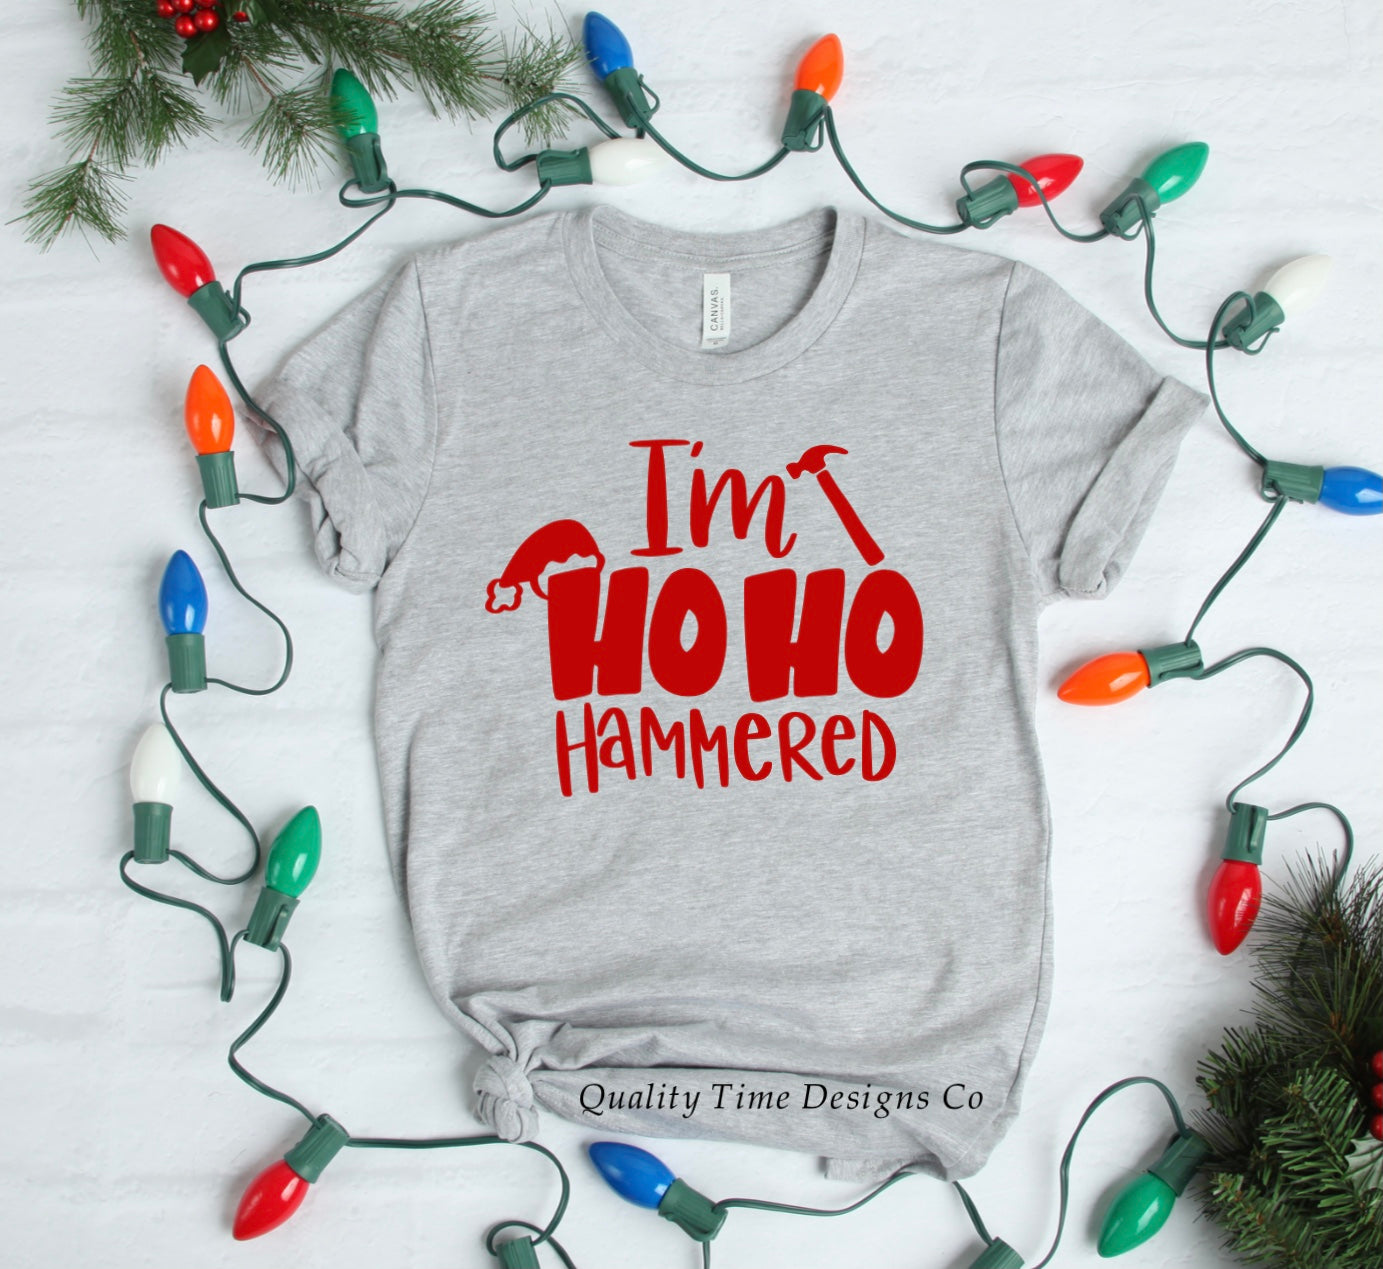 I’m ho ho hammered t-shirt 